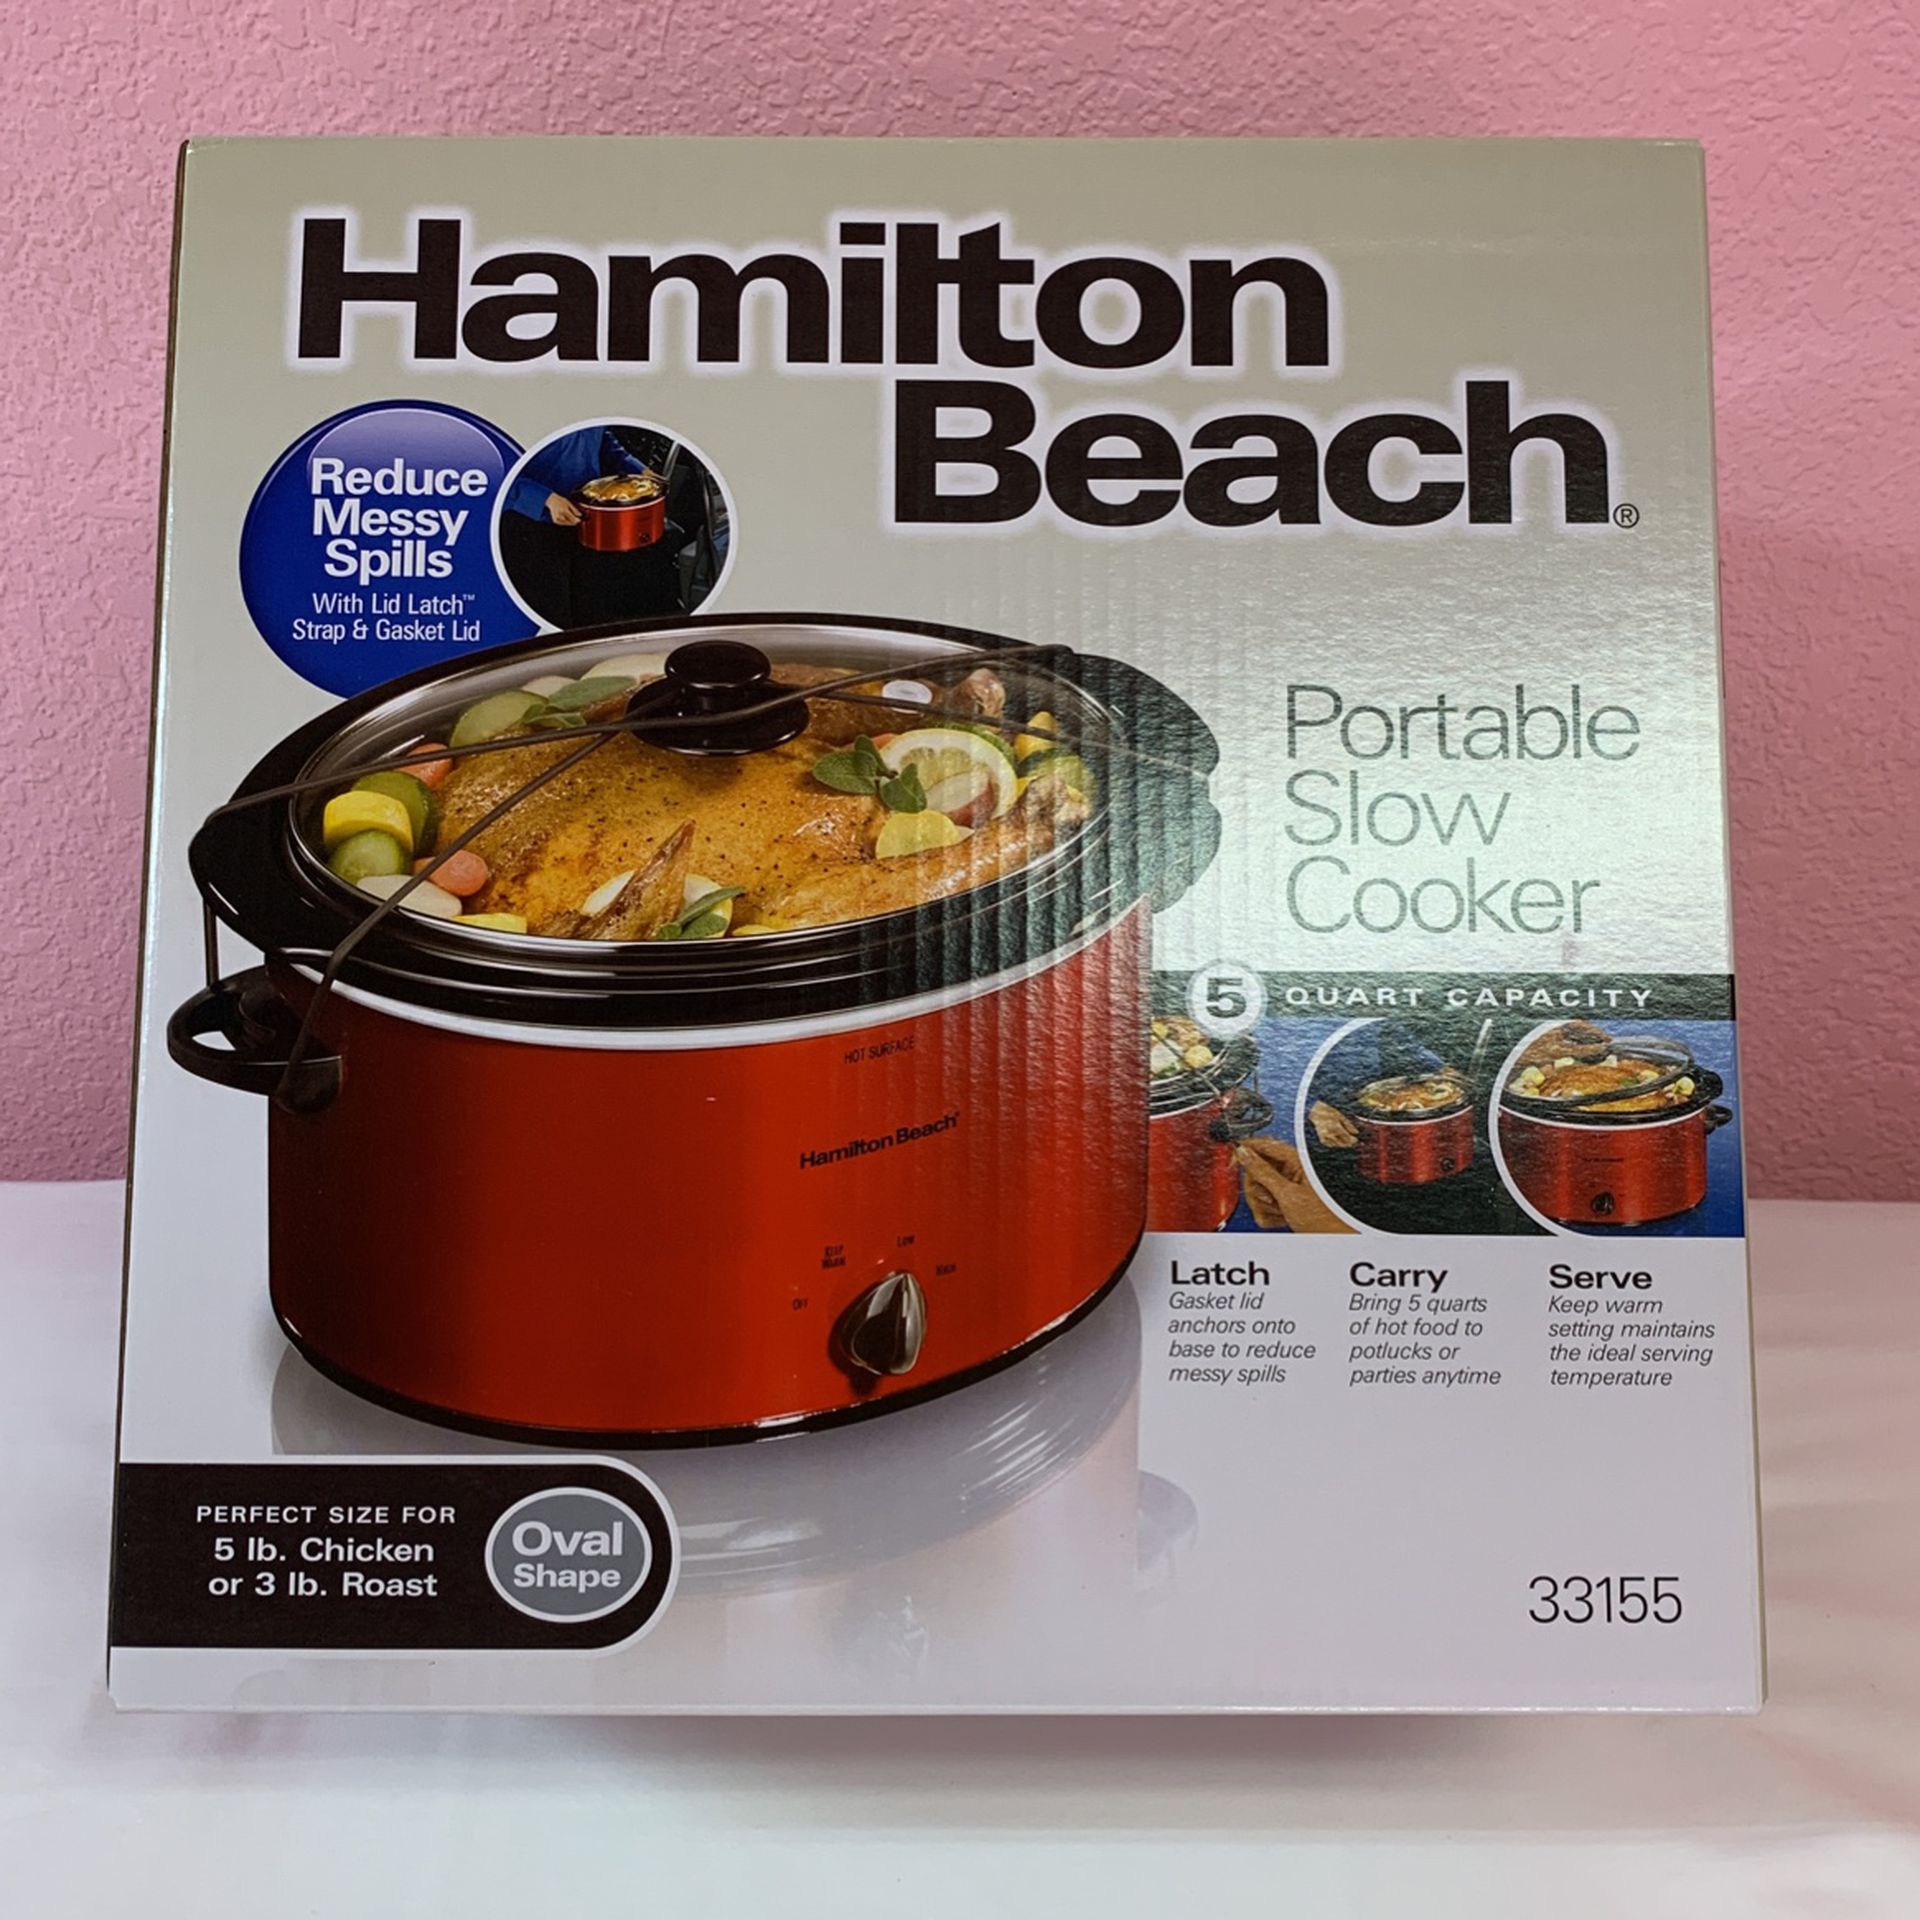 Hamilton Beach 5-Quart Oval Portable Slow Cooker